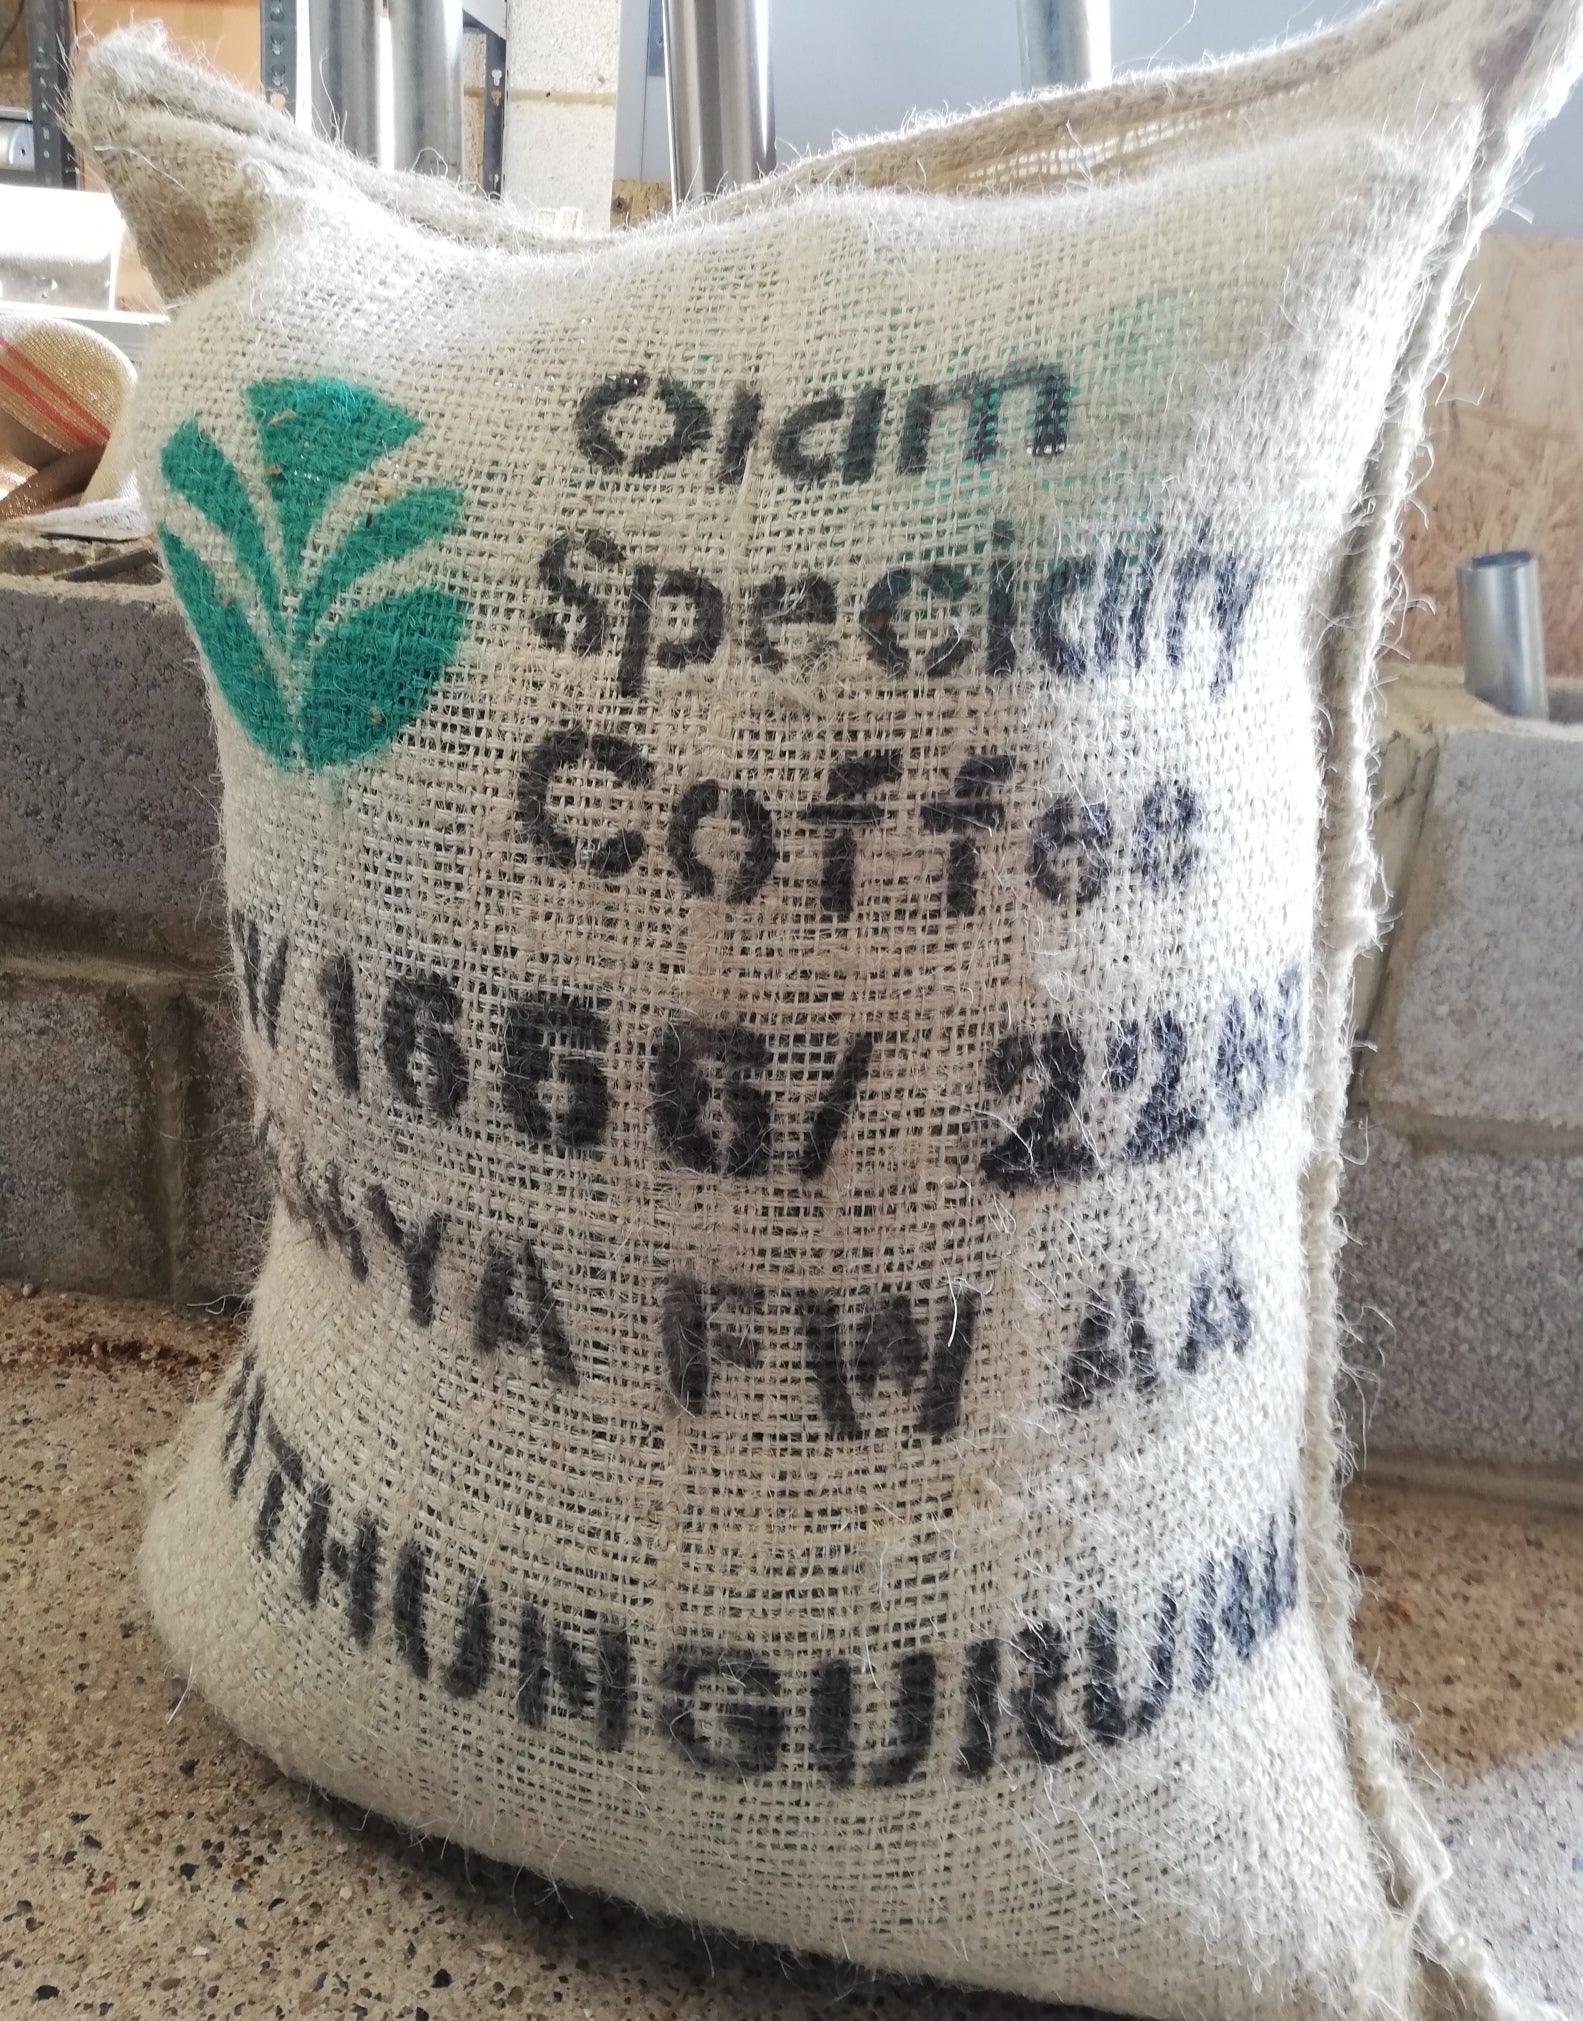 Kenyan - Single origin roasted coffee - Sidewalk Coffee Company